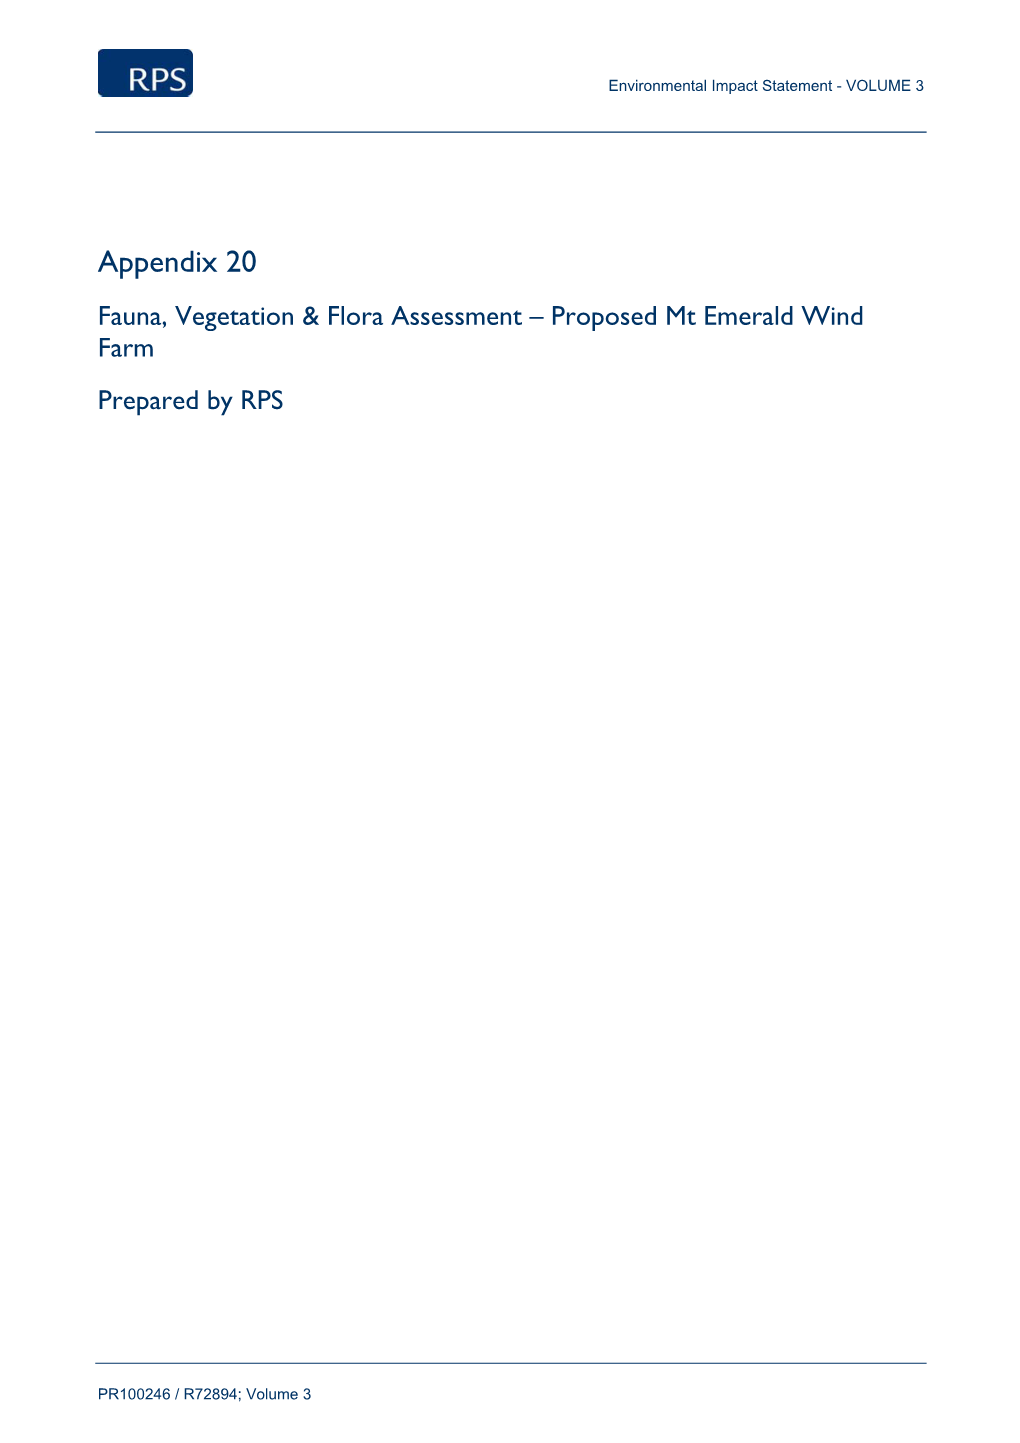 Appendix 20 Fauna, Vegetation & Flora Assessment – Proposed Mt Emerald Wind Farm Prepared by RPS